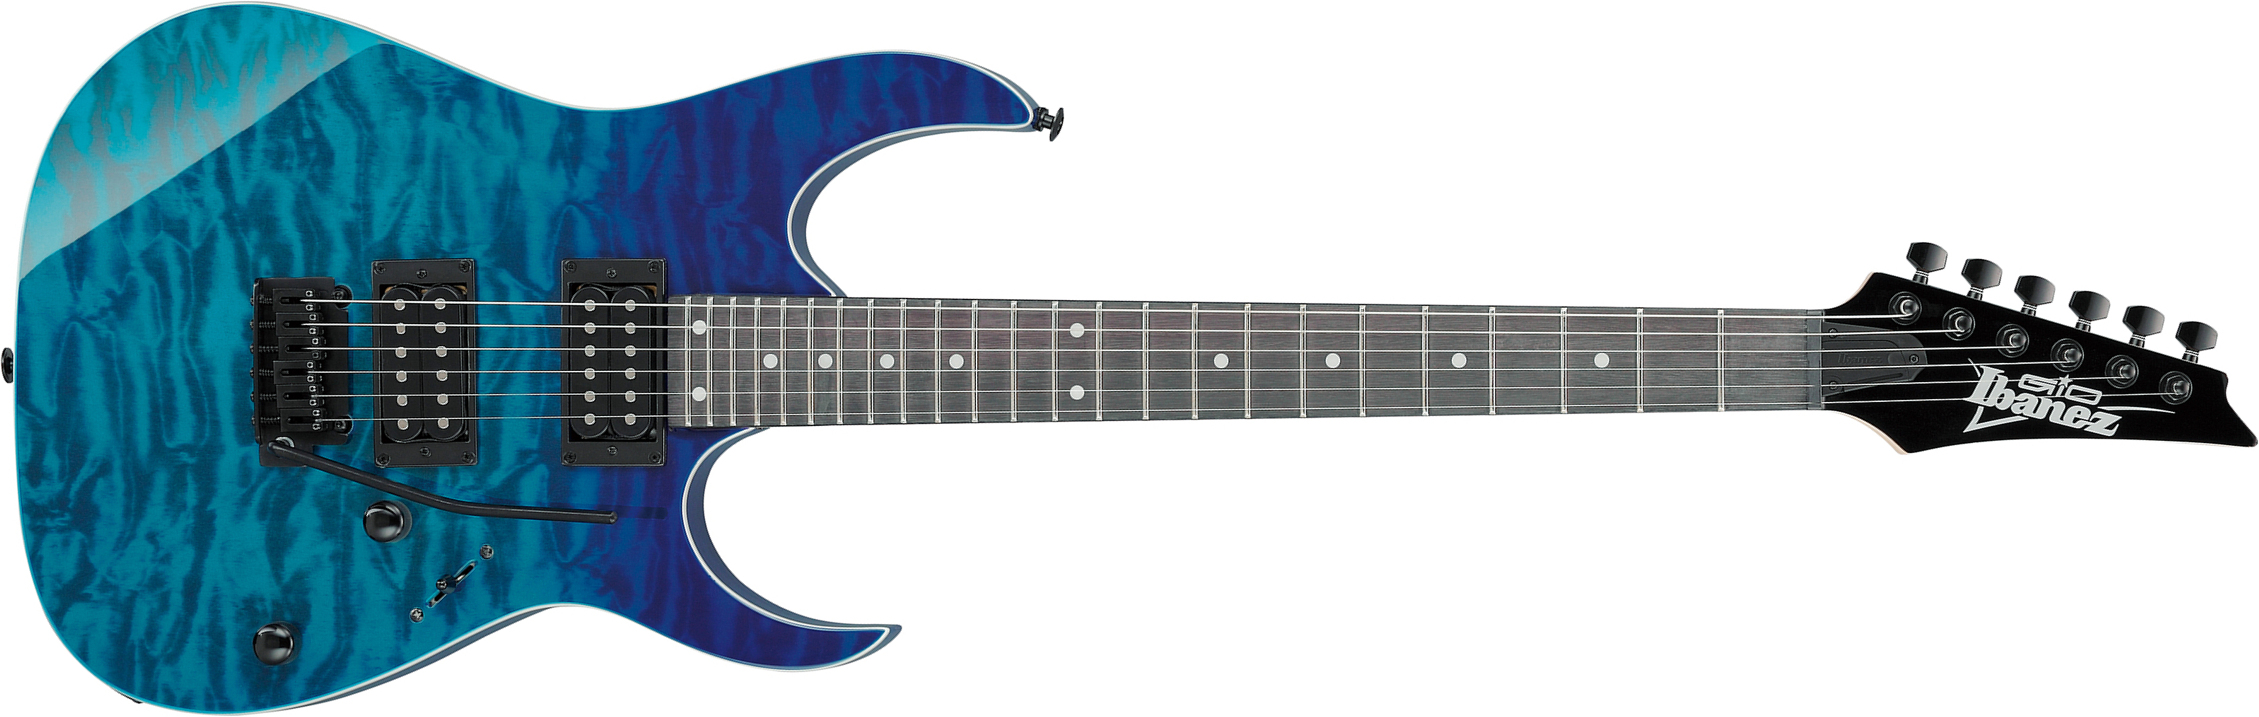 Ibanez Grg120qasp Bgd Gio 2h Trem Pur - Blue Gradation - Metal electric guitar - Main picture